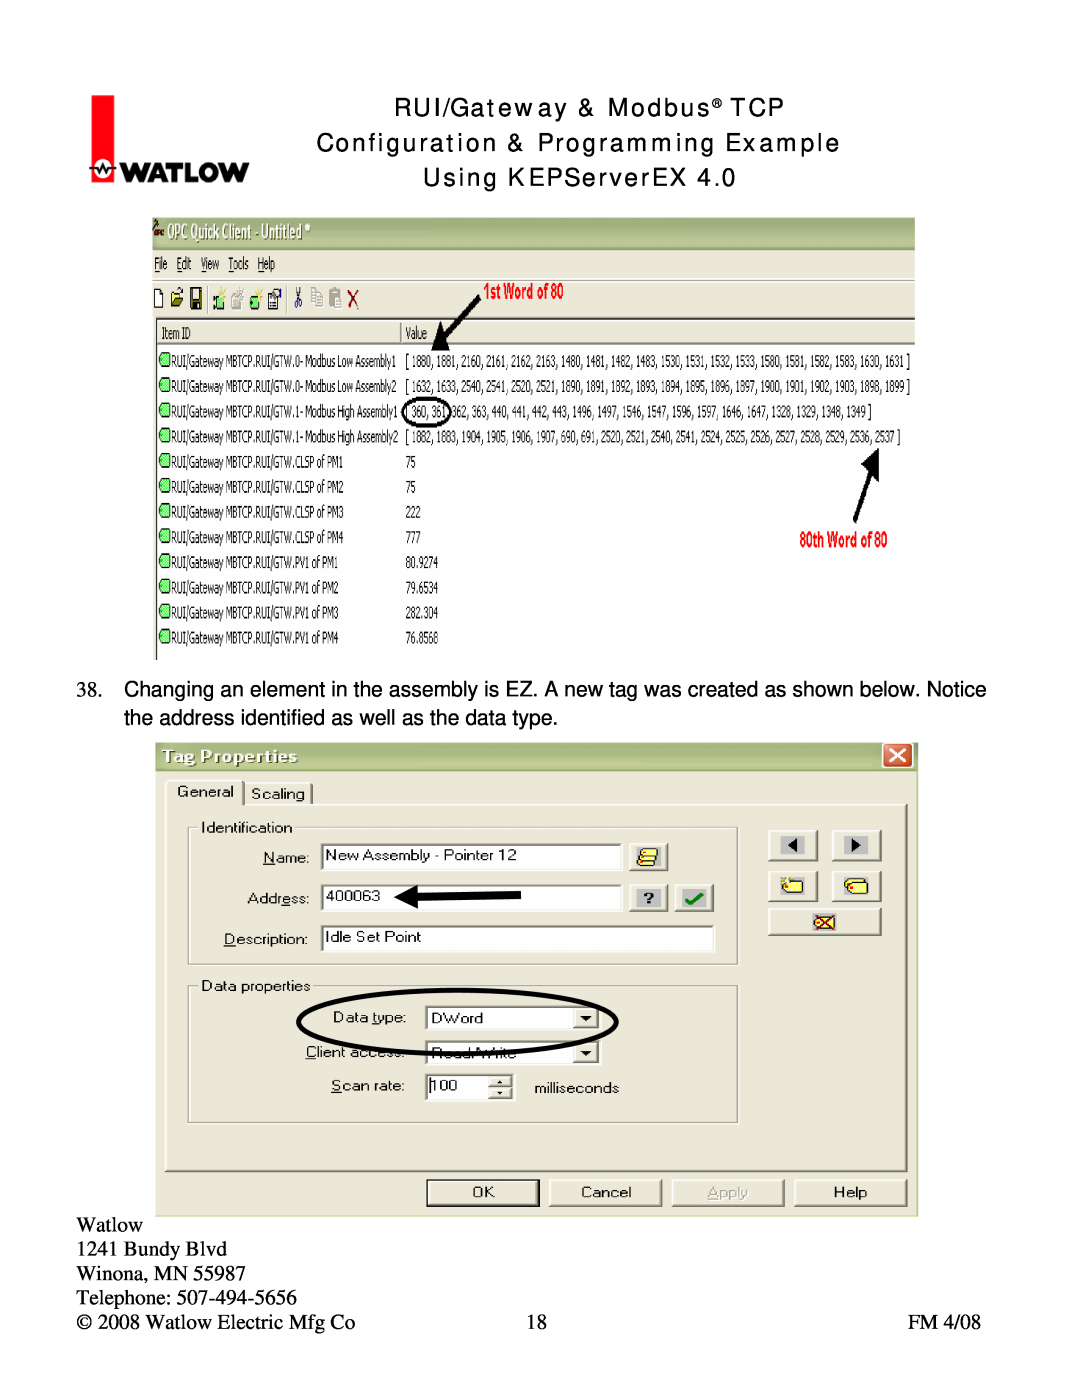 Watlow Electric RUI/Gateway & Modbus TCP Configuration & Programming Example, Using KEPServerEX, Watlow, Bundy Blvd 